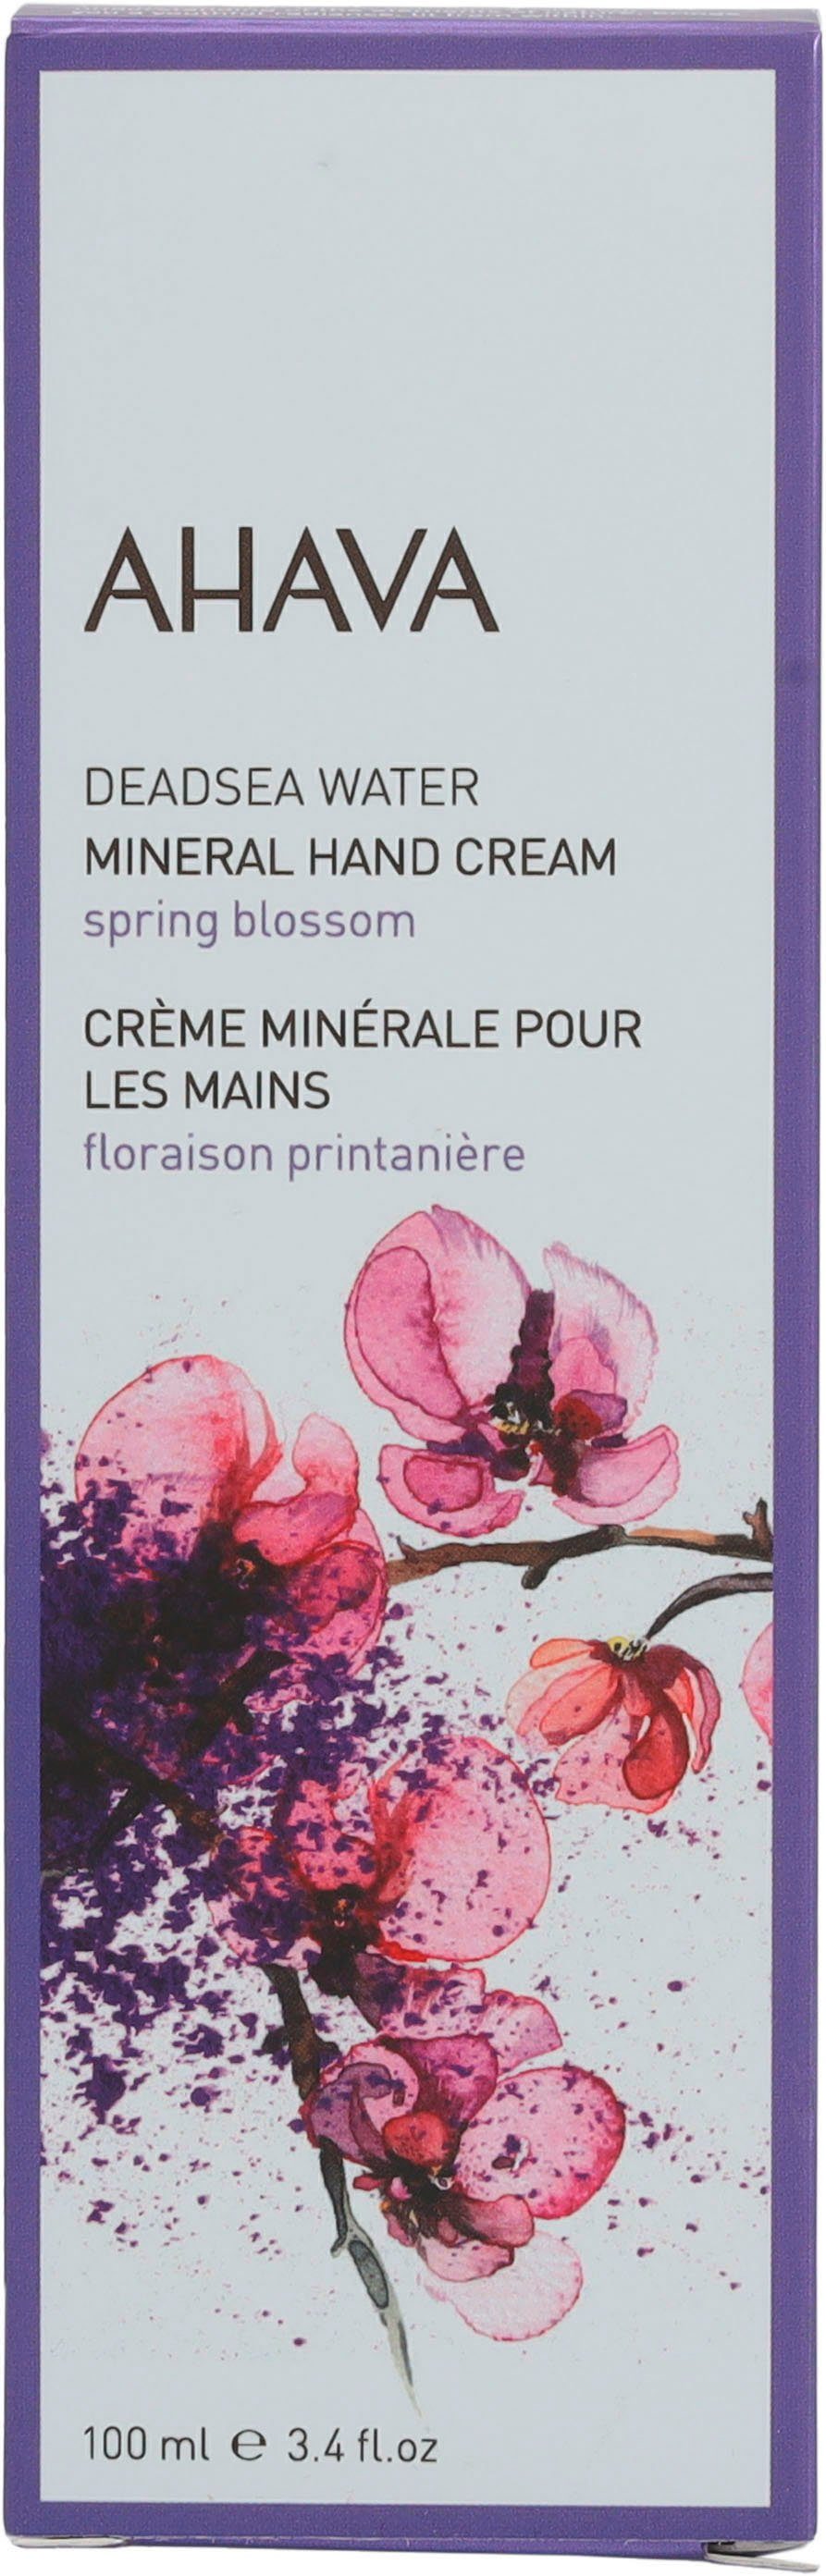 Hand AHAVA Handcreme Spring Cream Mineral Blossom Deadsea Water